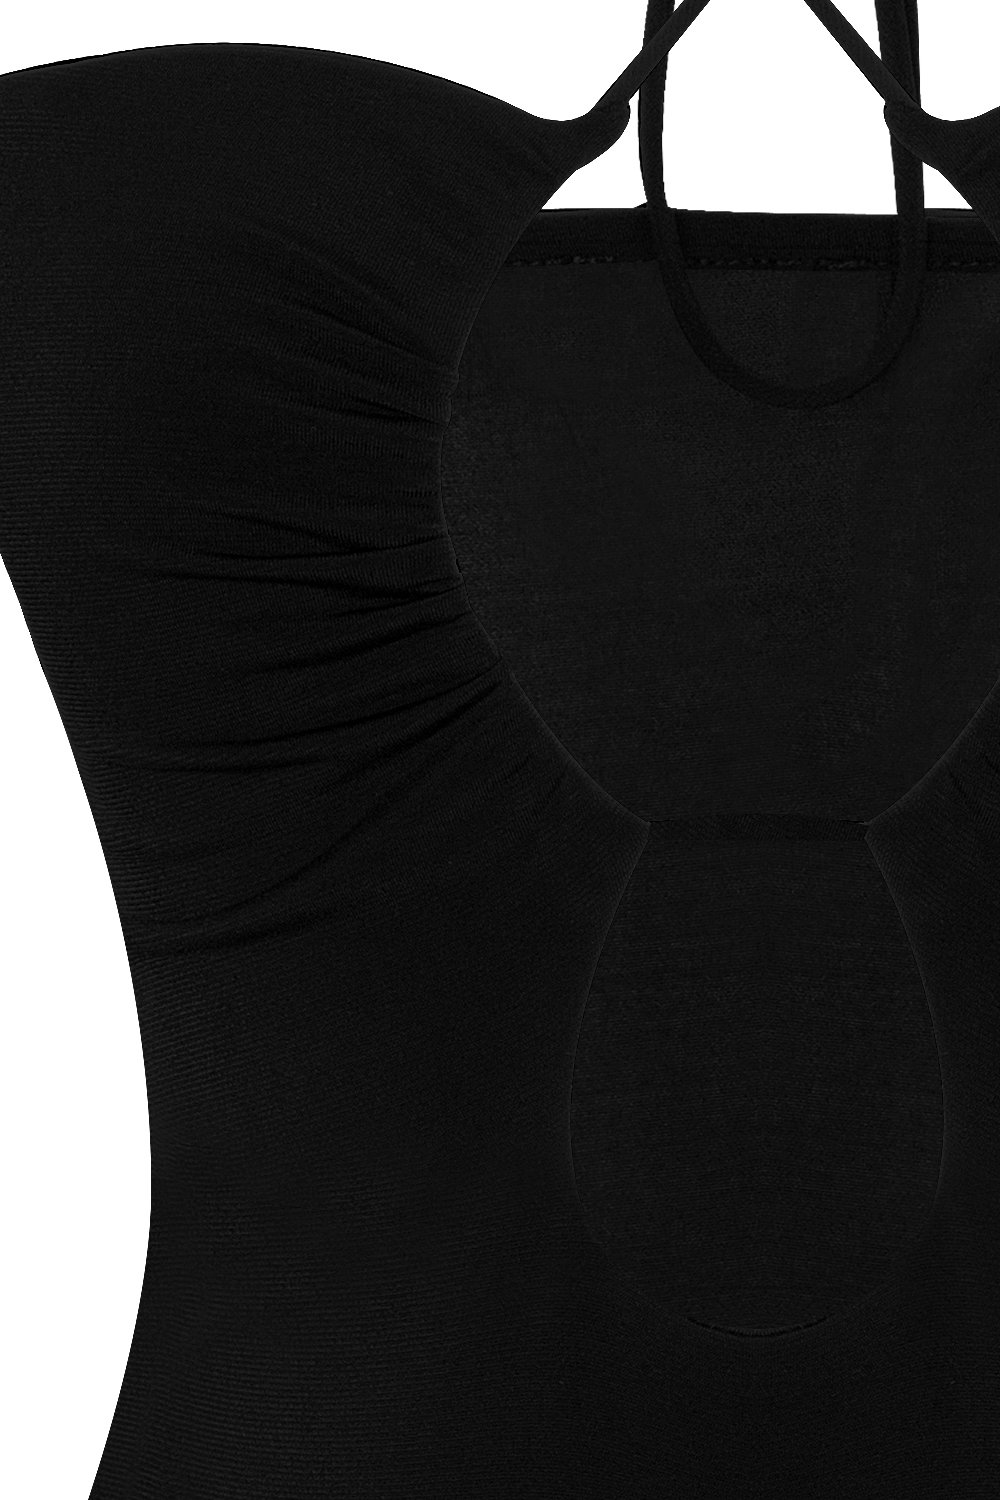 Missi Siyah Elbise EY200 - 15